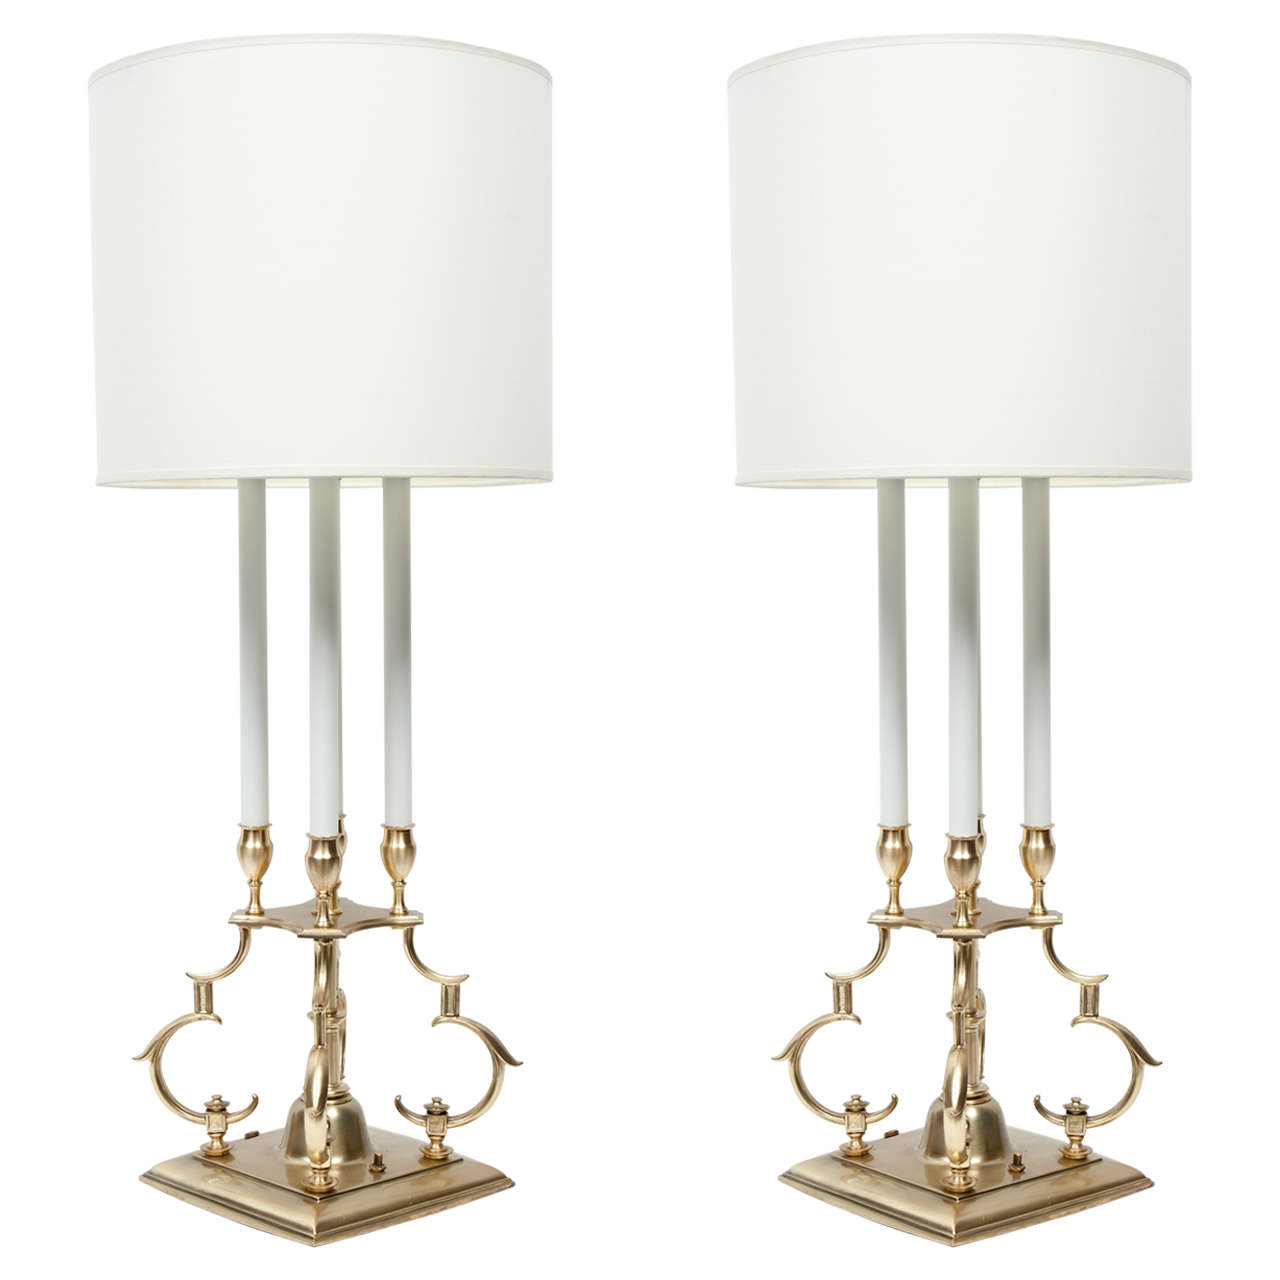 Pair of Satin Brass Candelabra Lamps by Stiffel